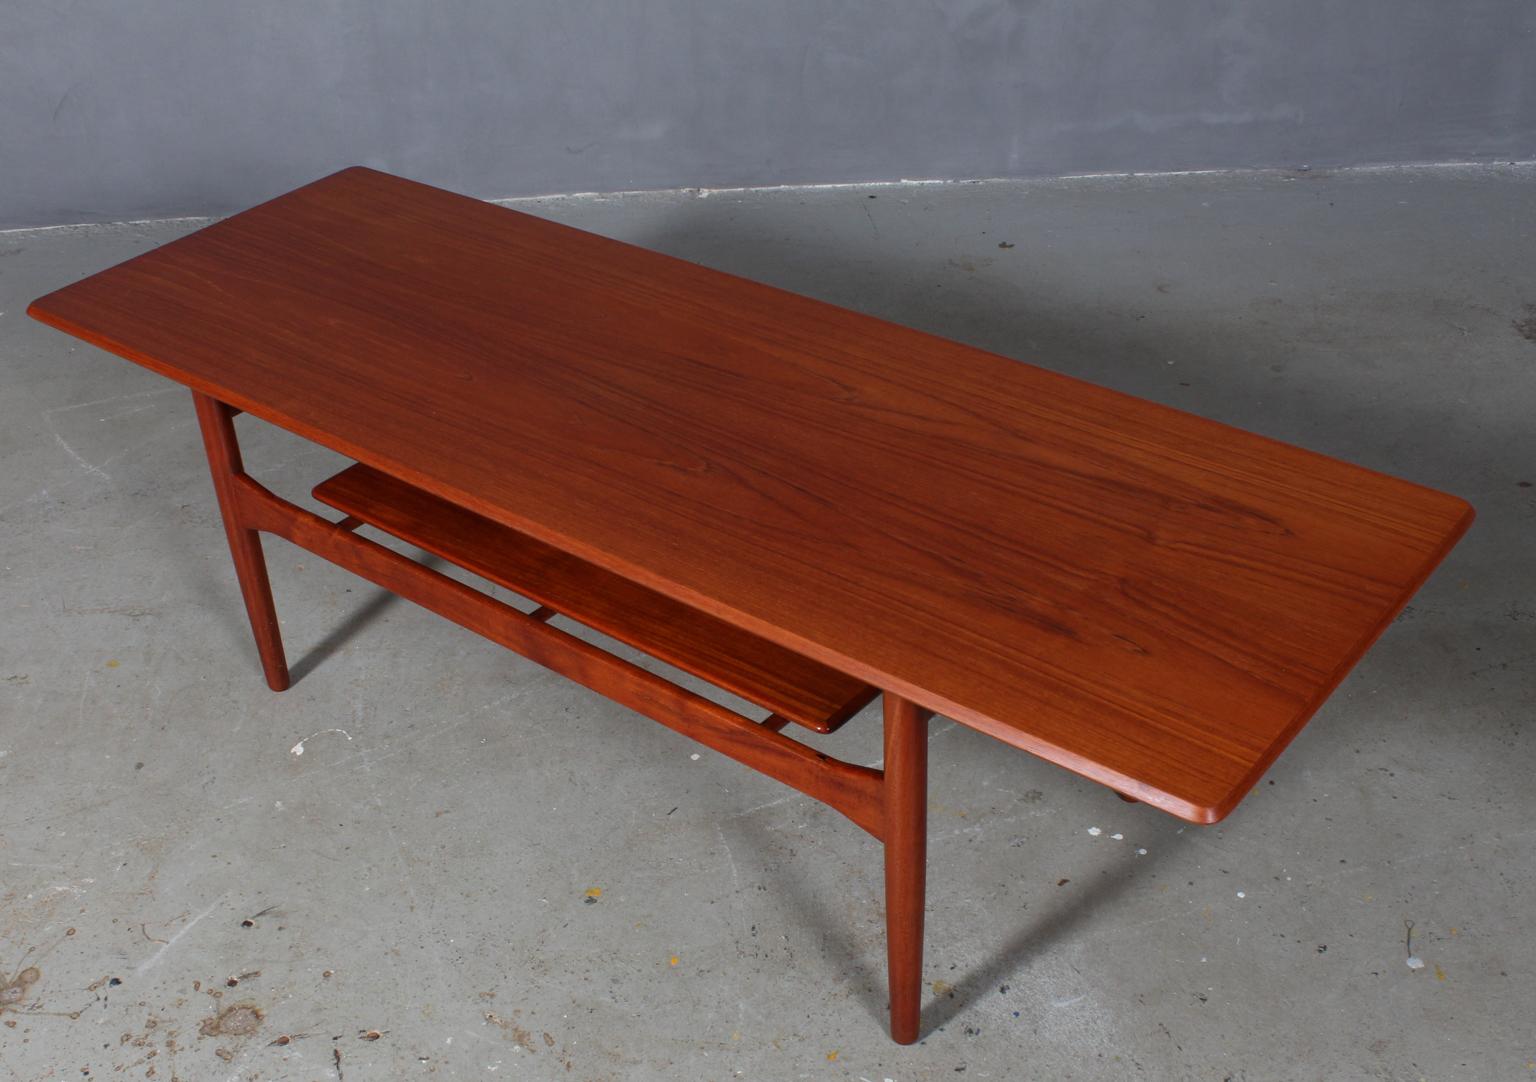 Ib Kofod-Larsen sofa table in partly solid teak.

Made by Christensen & Larsen.